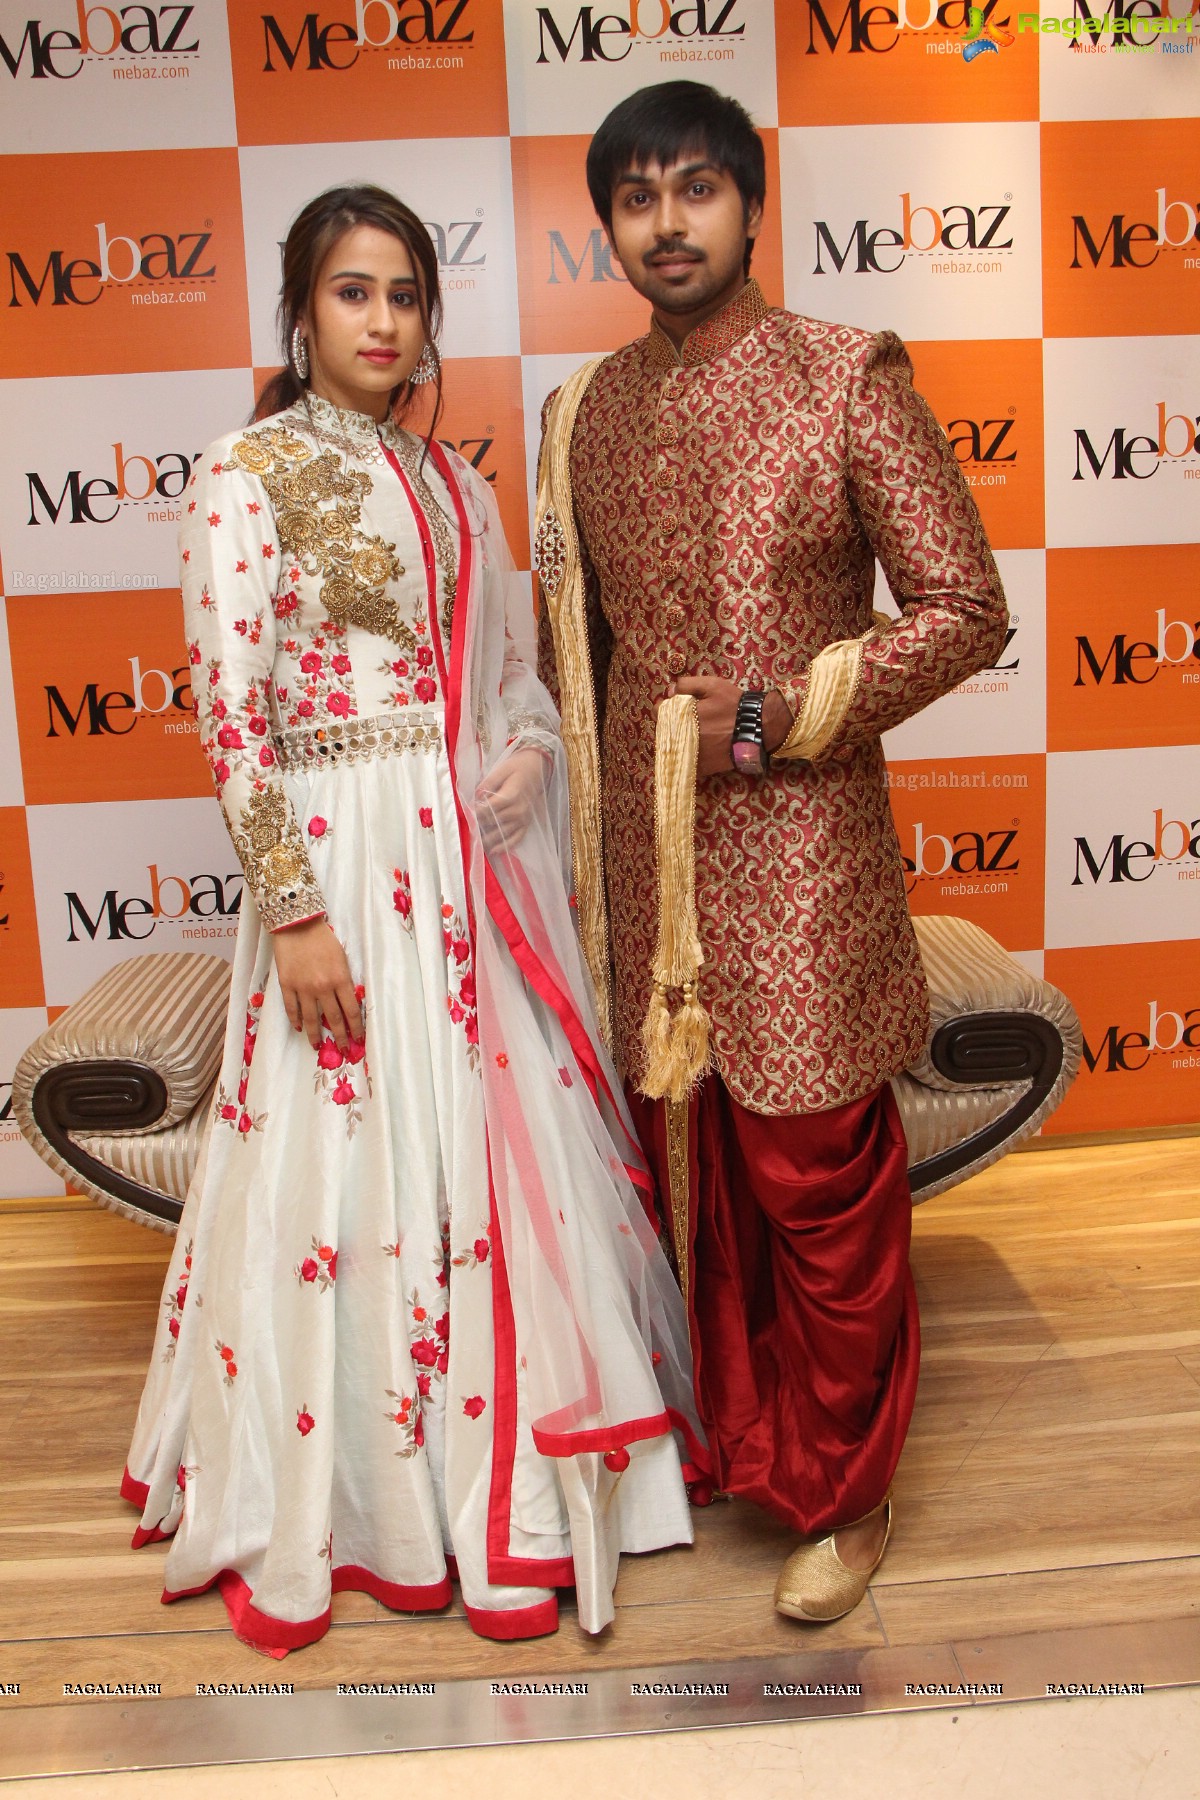 Mebaz Exquisite Wedding Collection Launch, Hyderabad